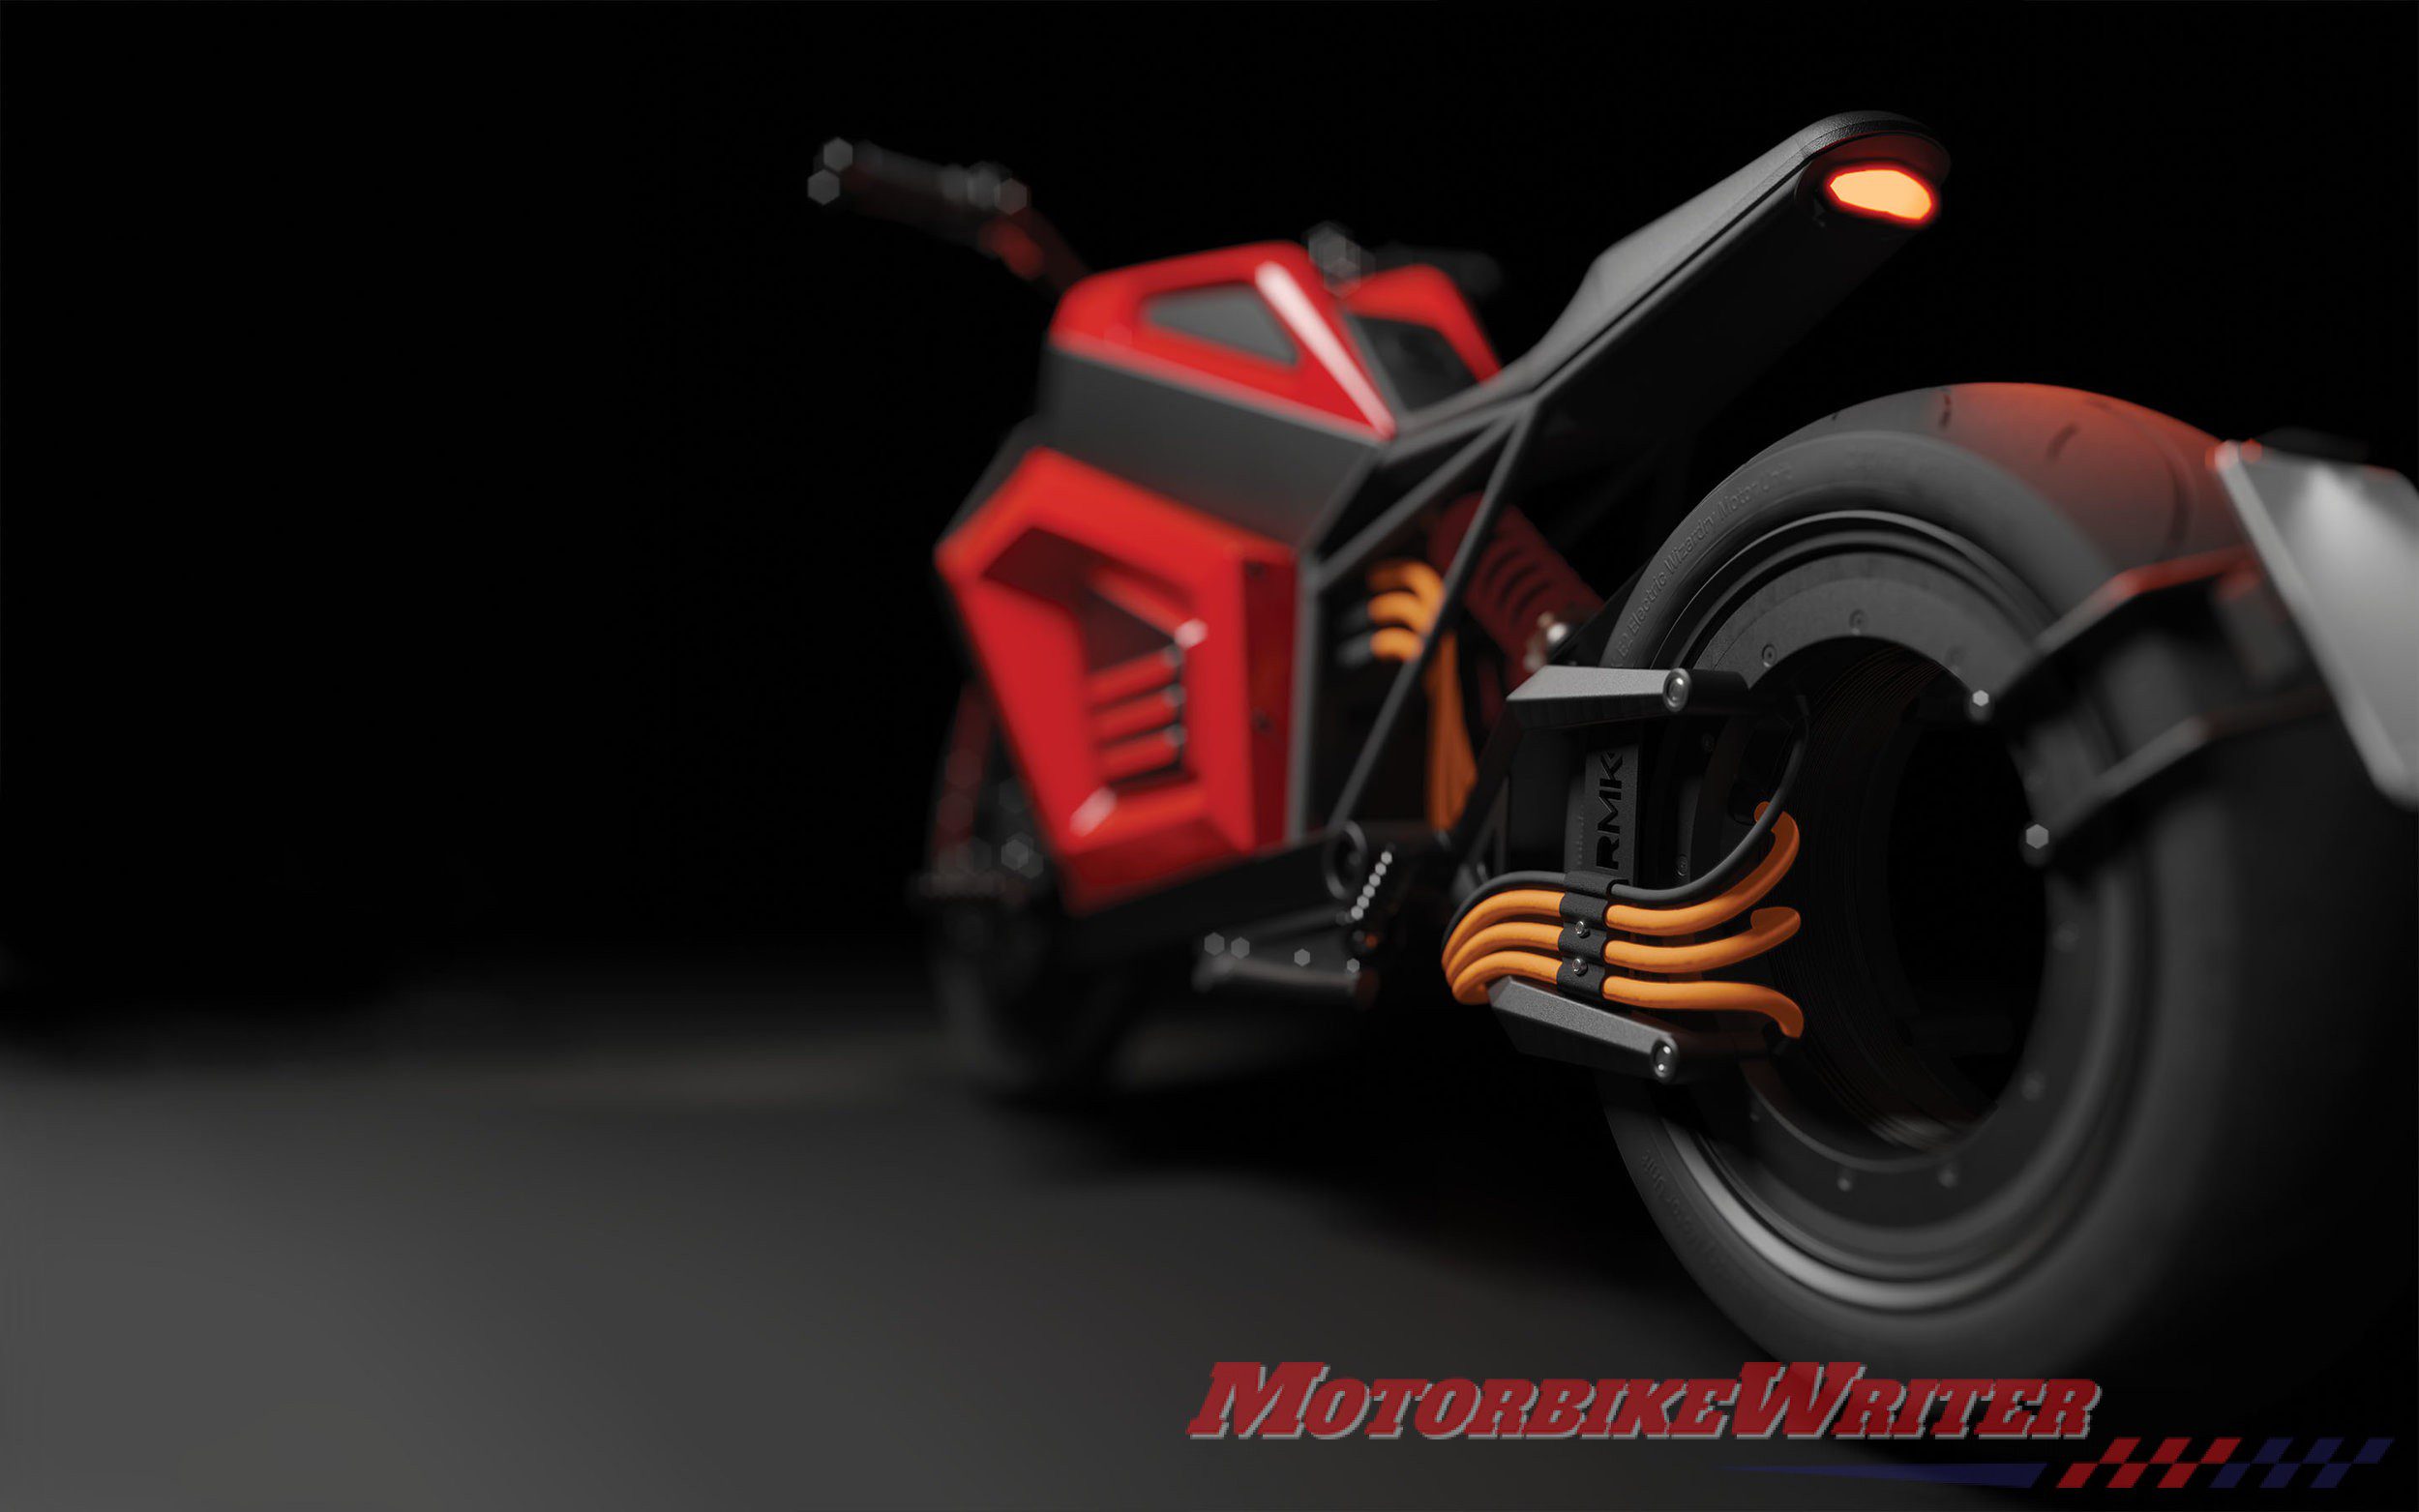 2020 RMK E2 prototype electric motorcycle